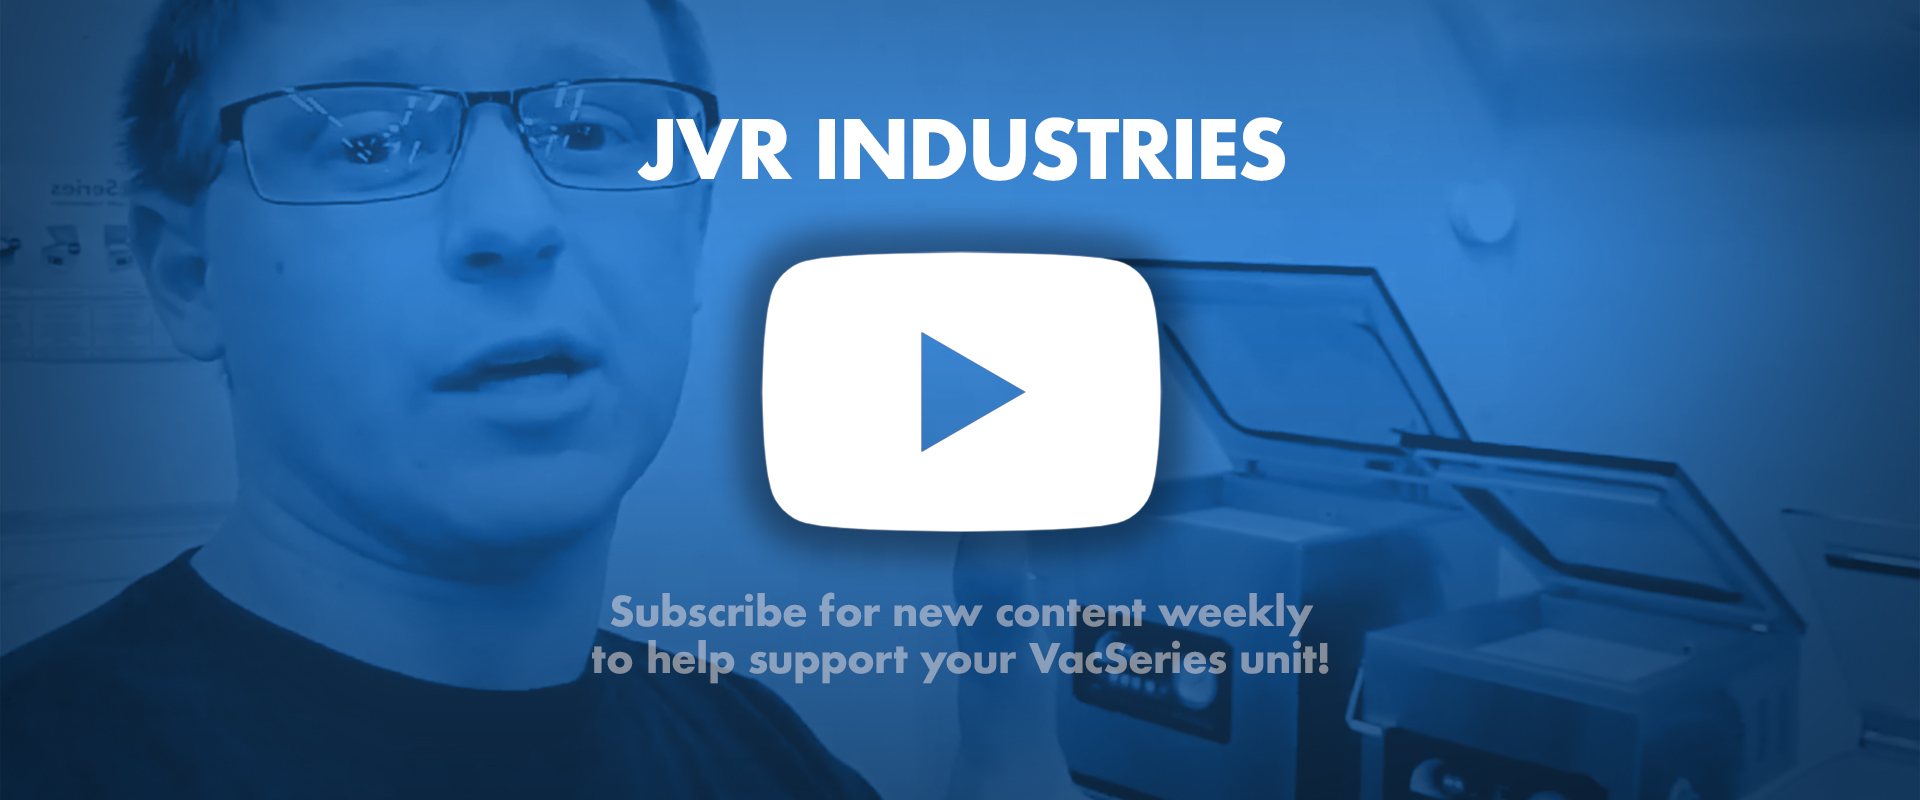 JVR Industries